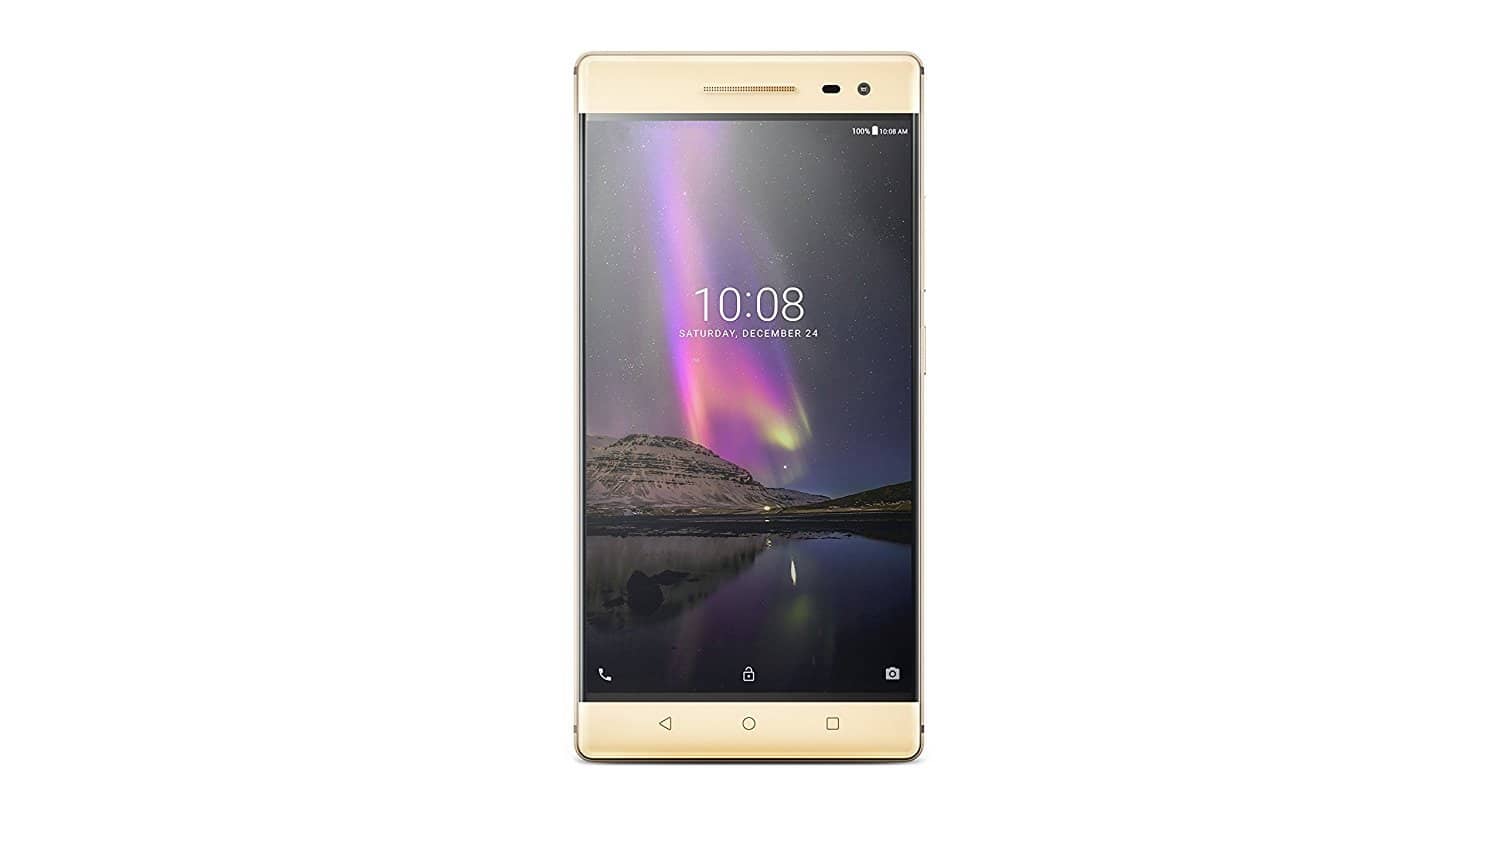 Lenovo Phab 2 Pro Unlocked Android Smartphone - Gold